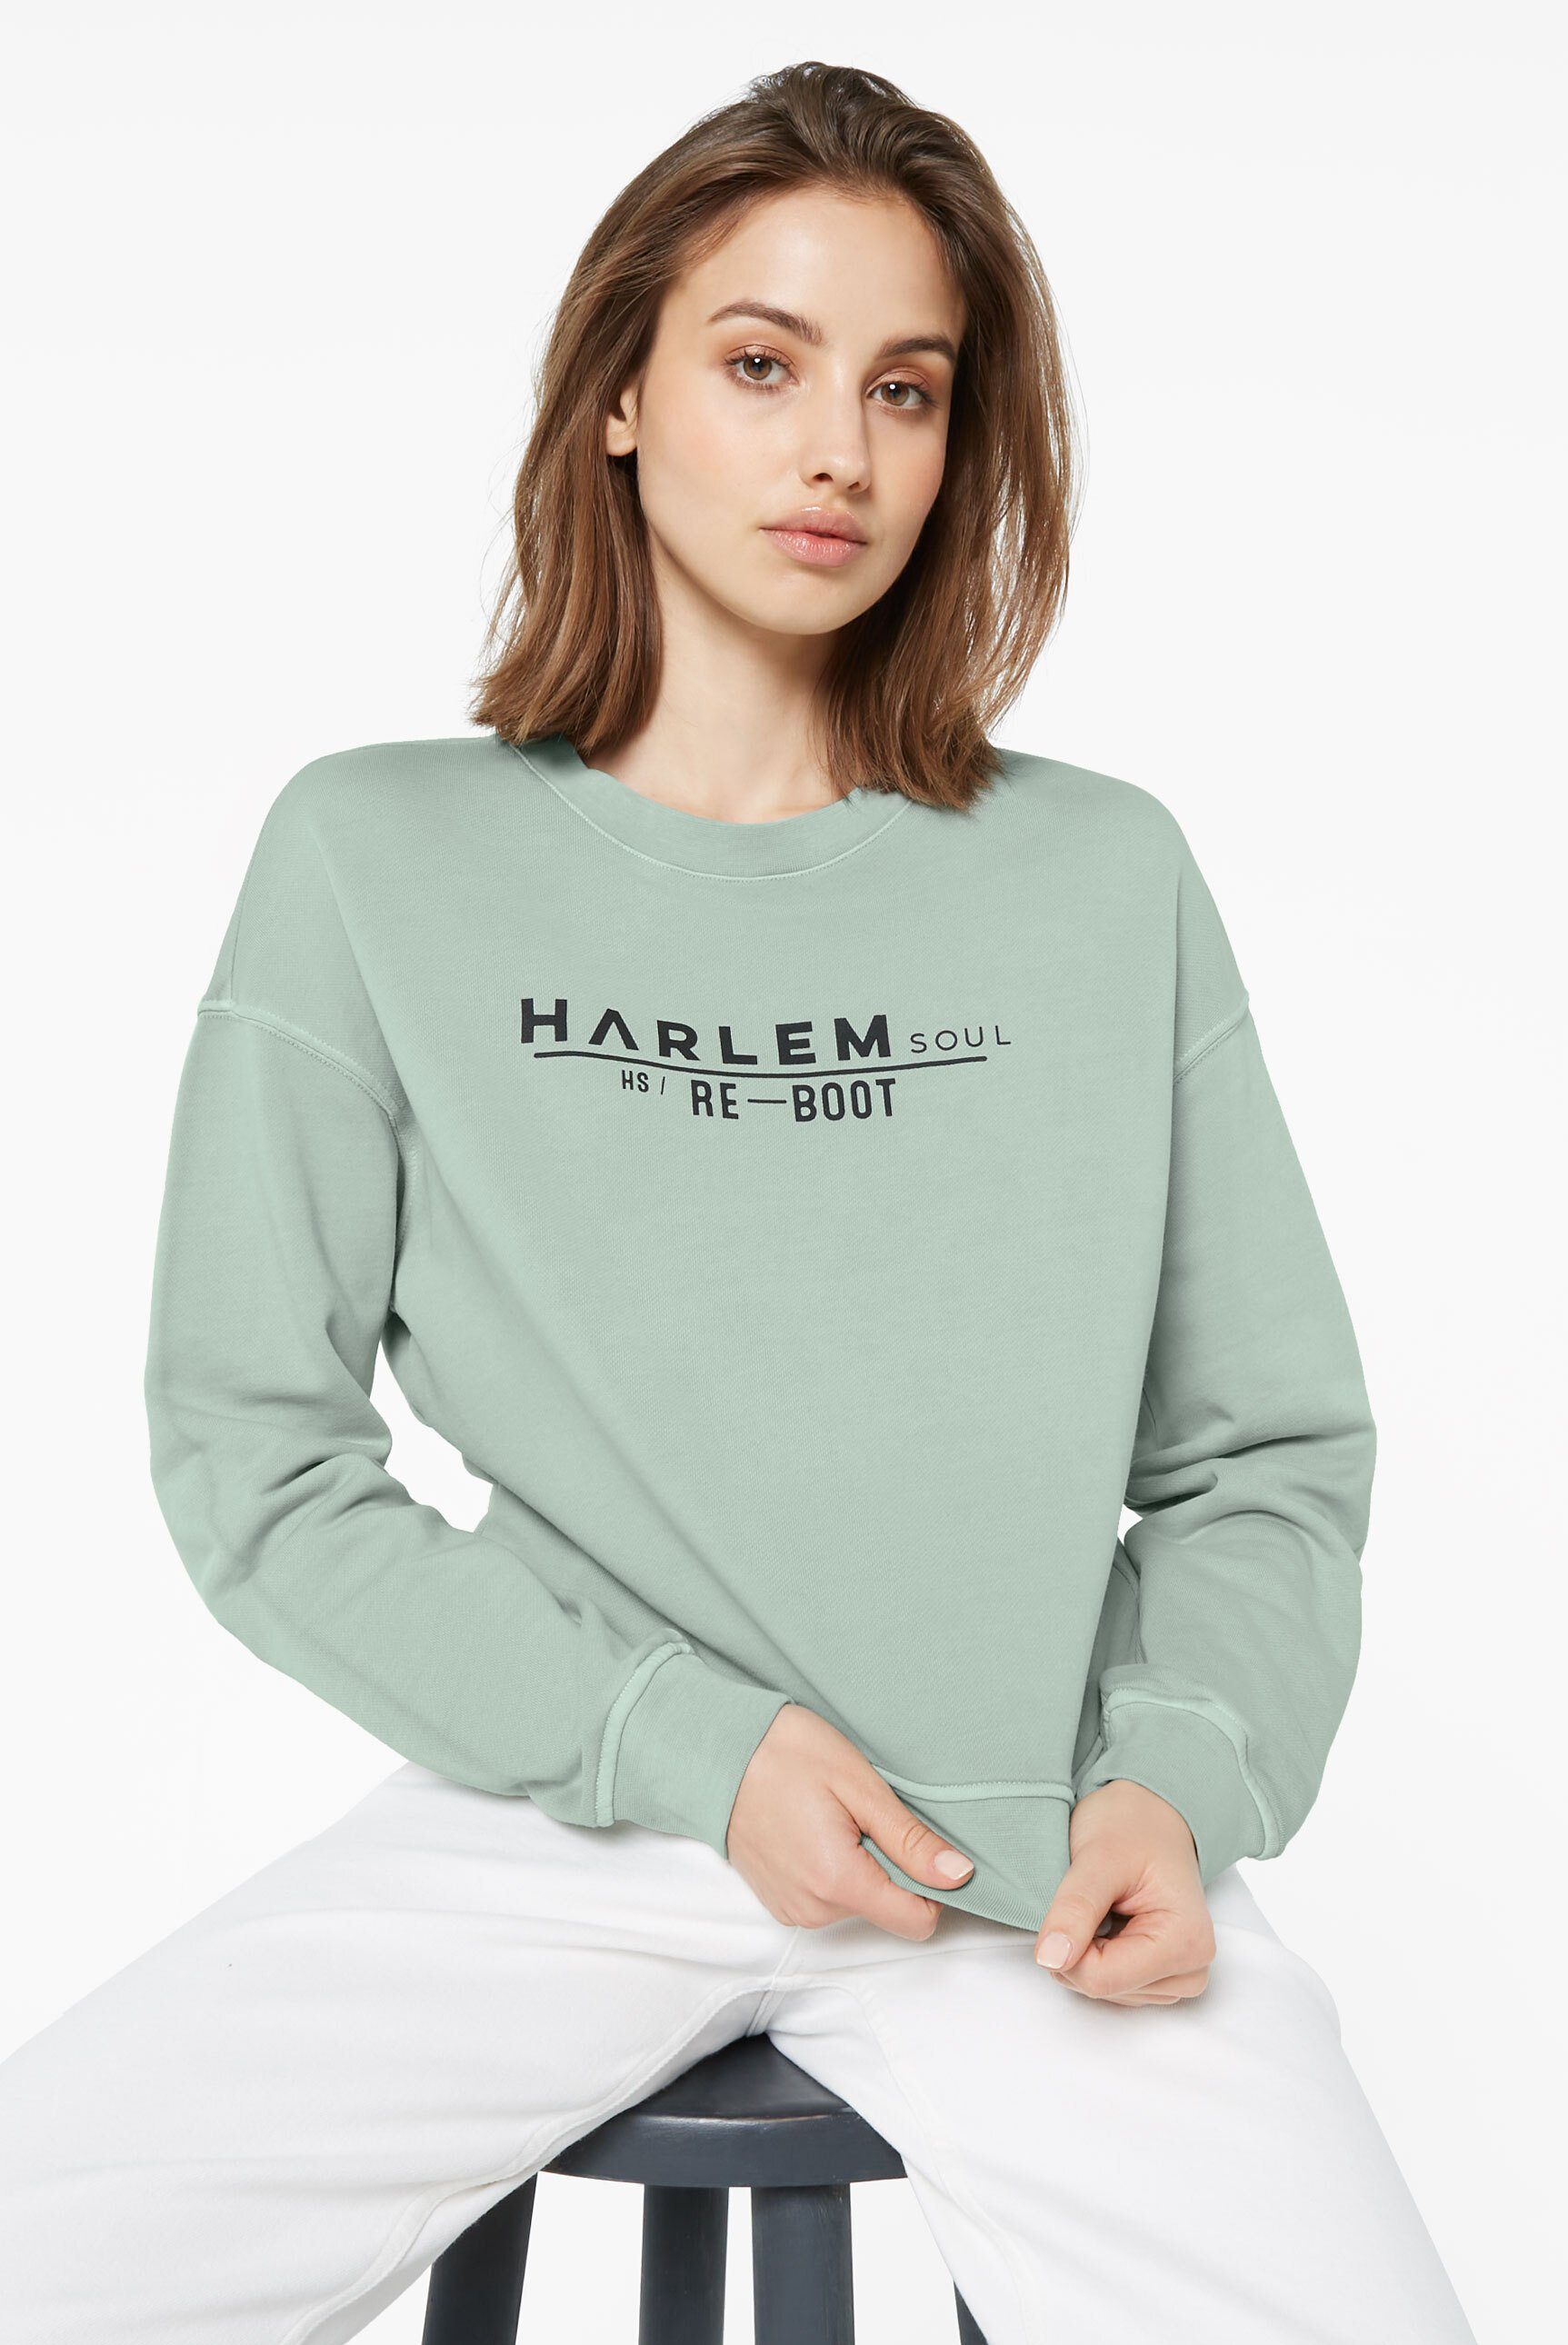 Rippbündchen mit Soul Sweater Harlem